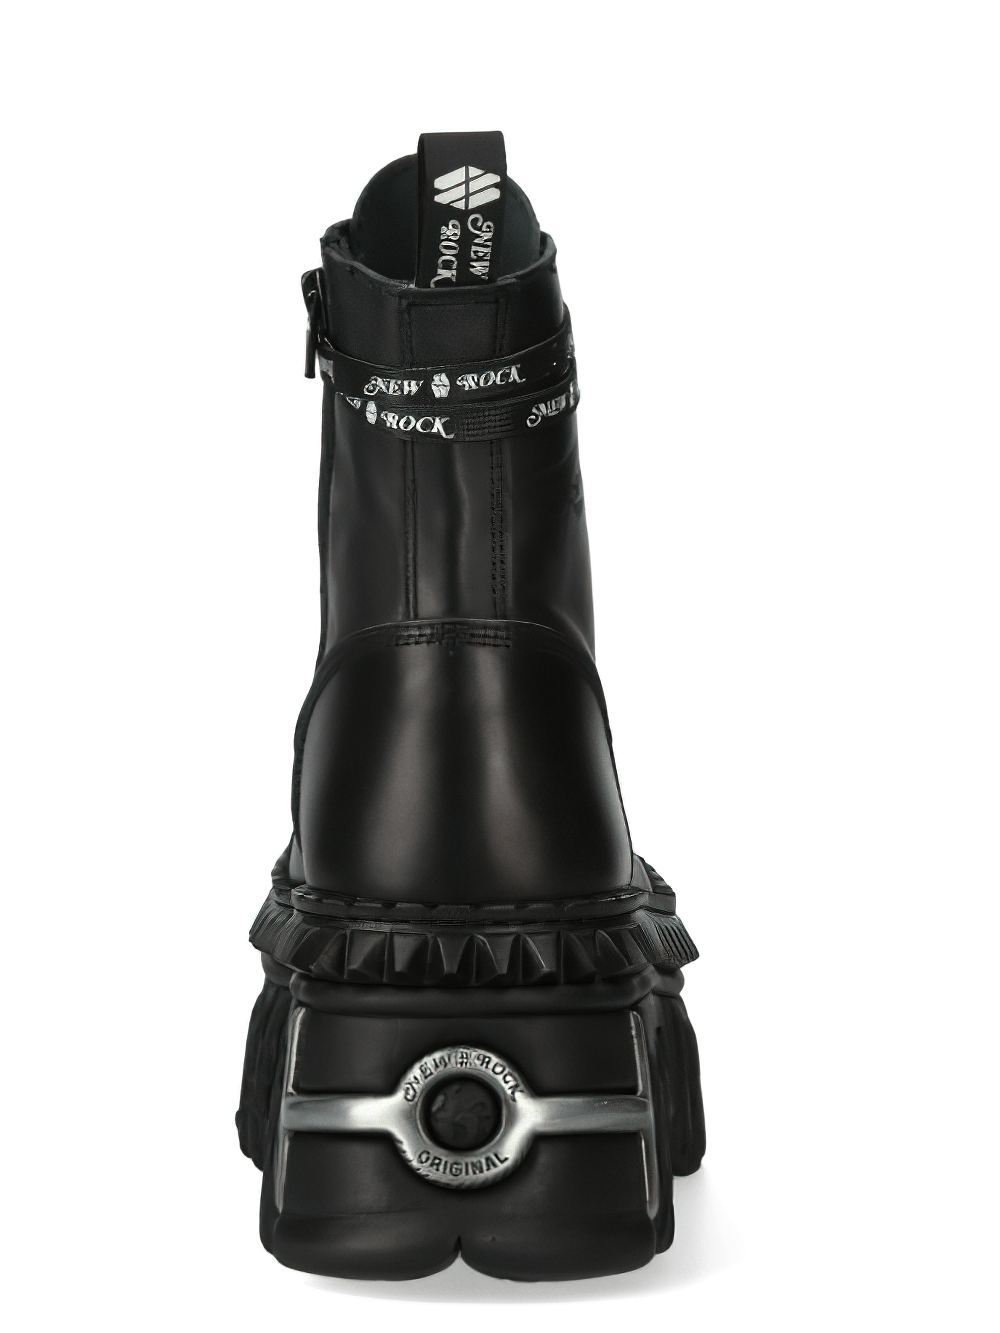 NEW ROCK Unisex Black Platform Boots in Gothic Style